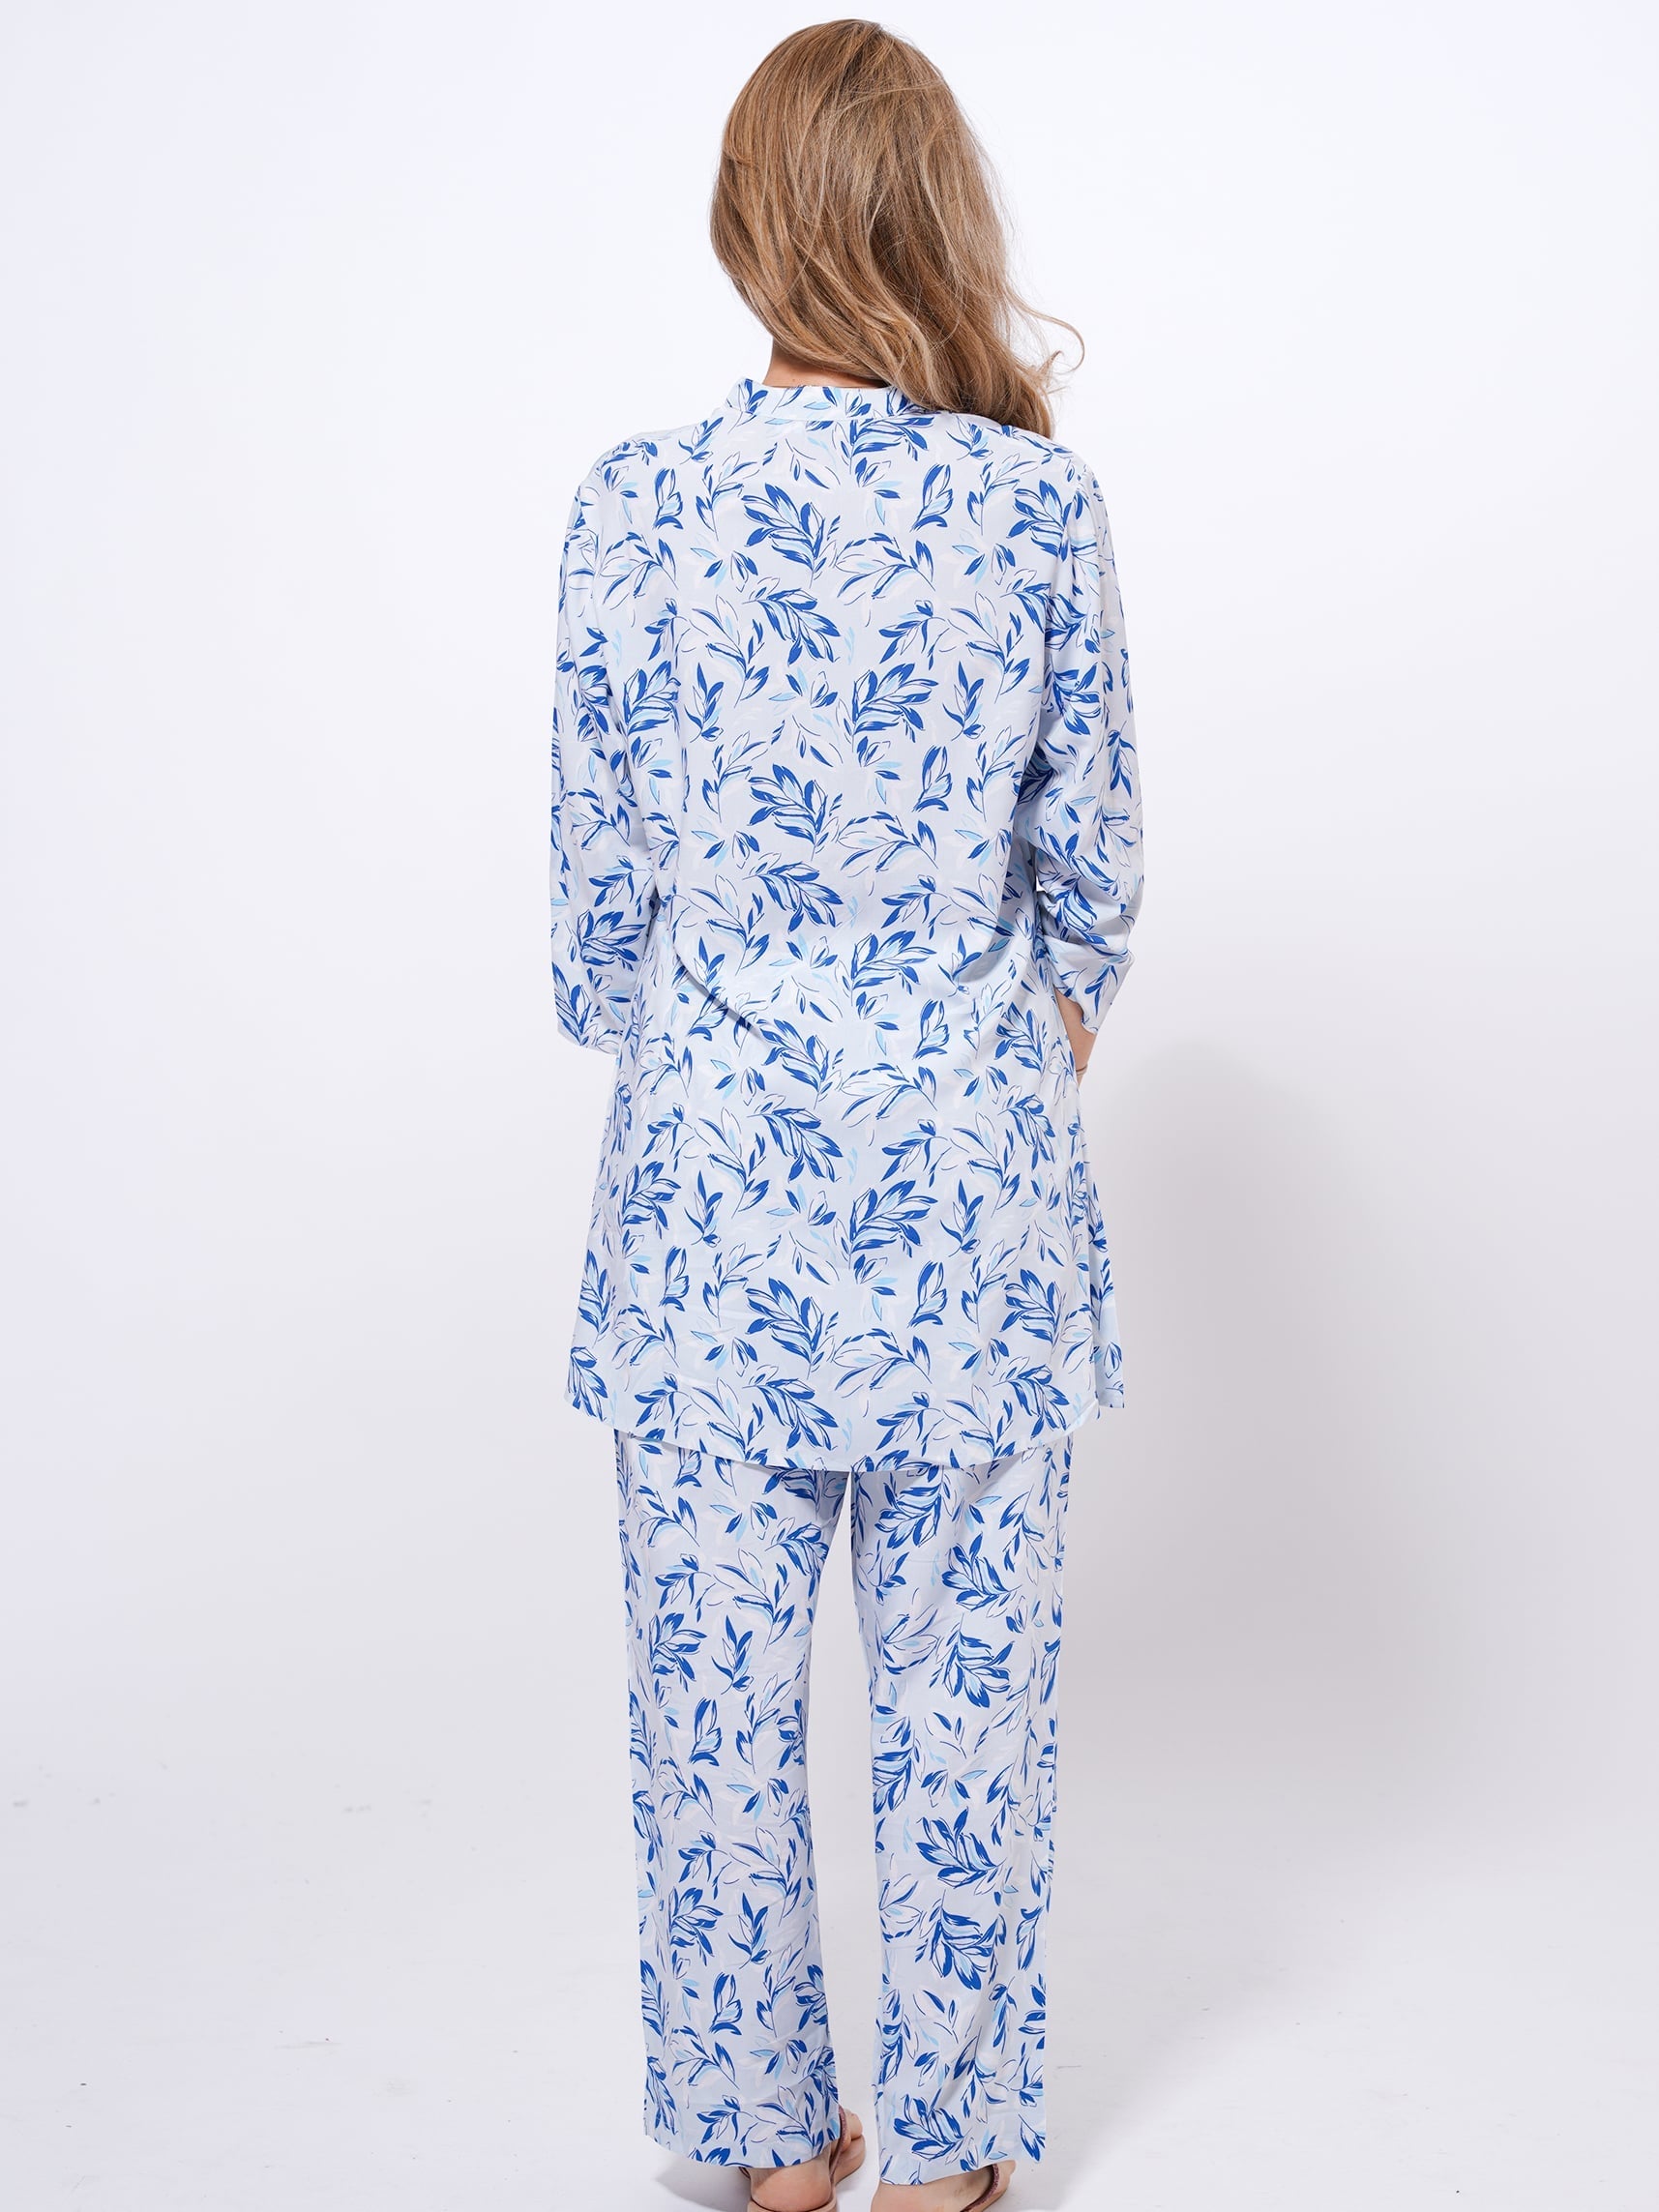 Blue Floral Print Pajamas - Women's Sleepwear Set | CozyPJs - inteblu